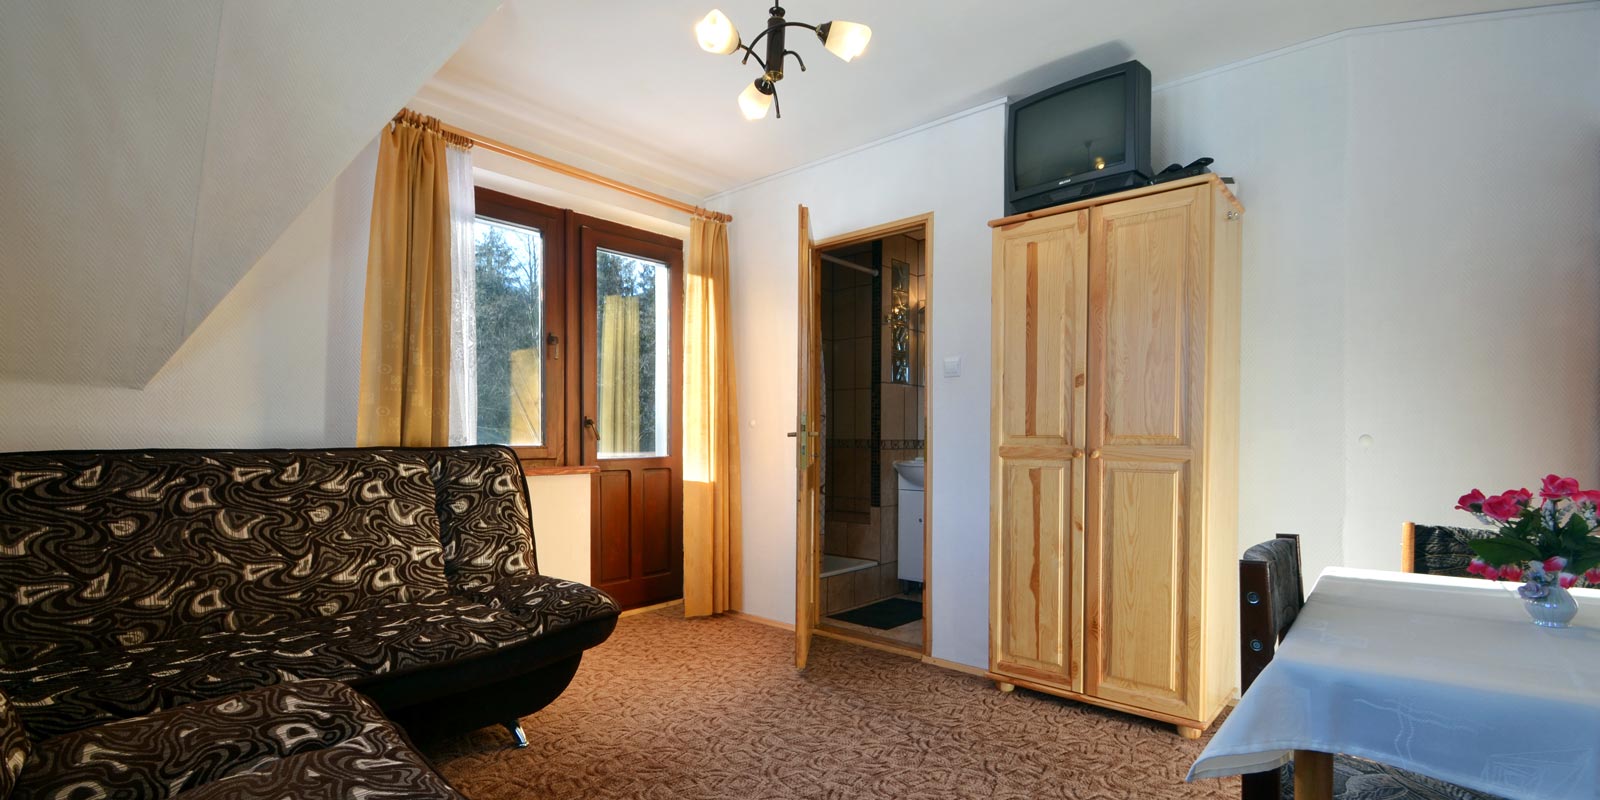 U LISA Villa in Zakopane Zimmer zu vermieten Polen Tatra Mountains 04